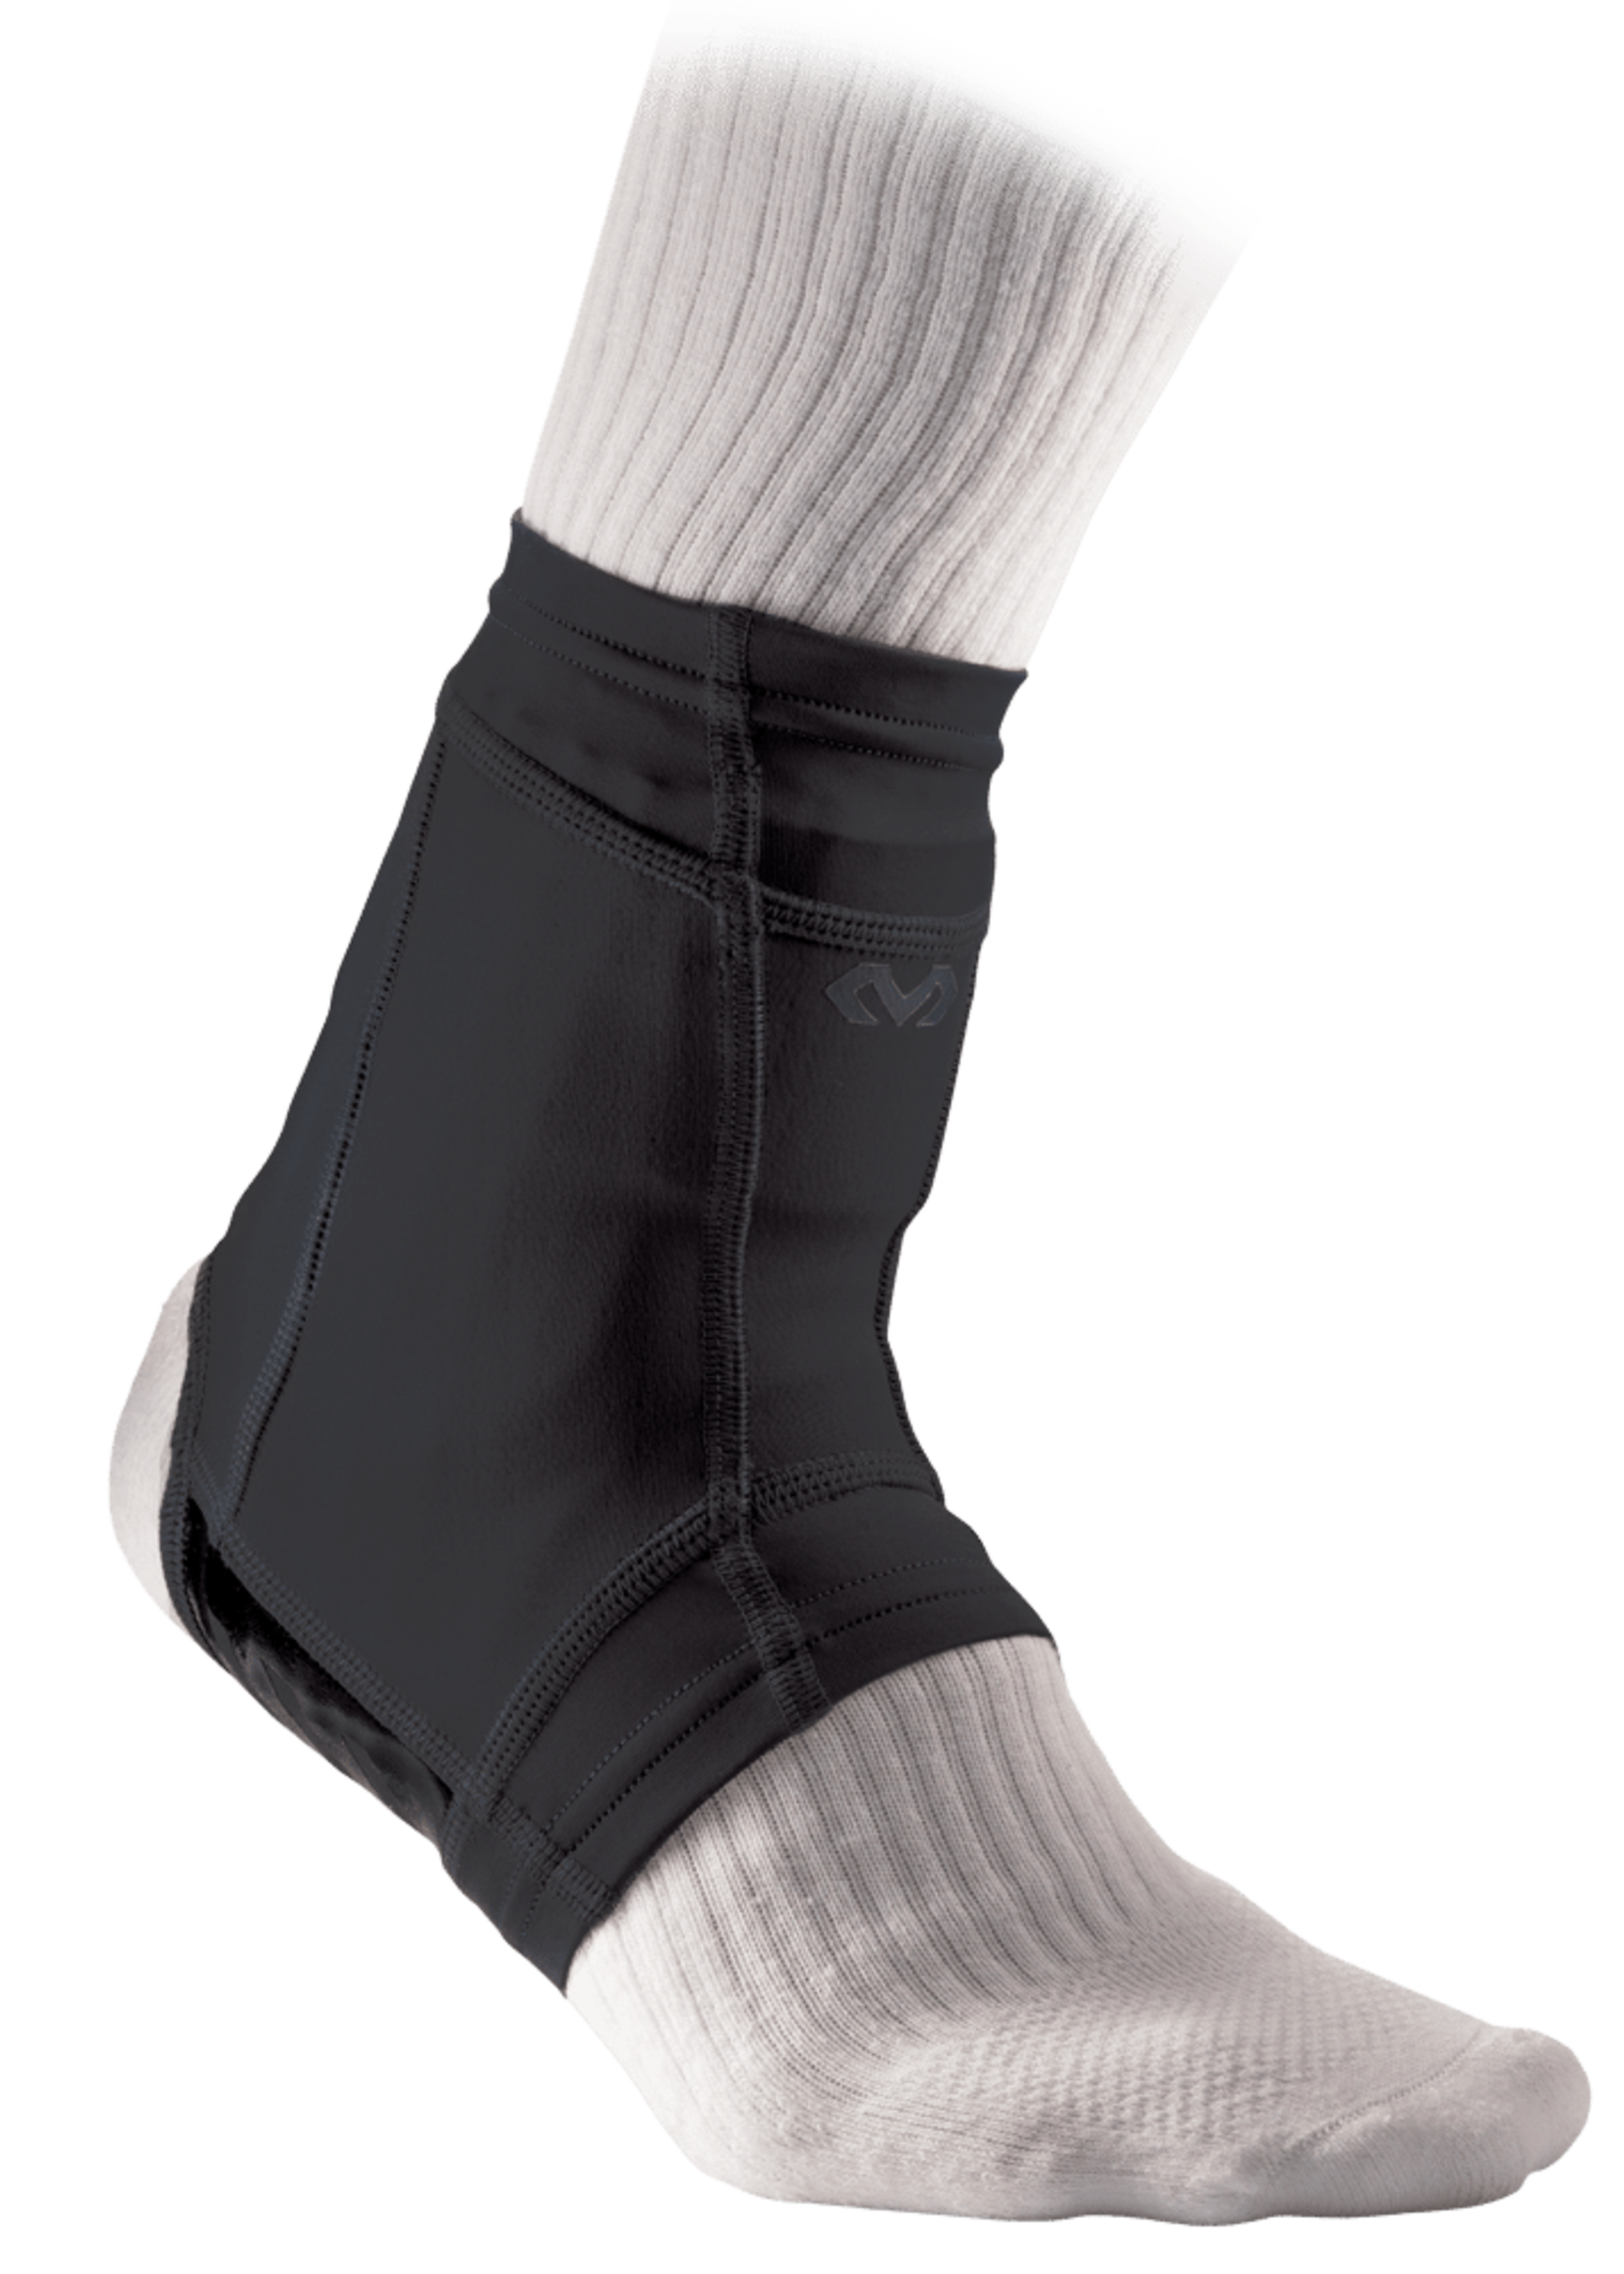 McDavid Ankle Brace Cover Compression Sleeve Black